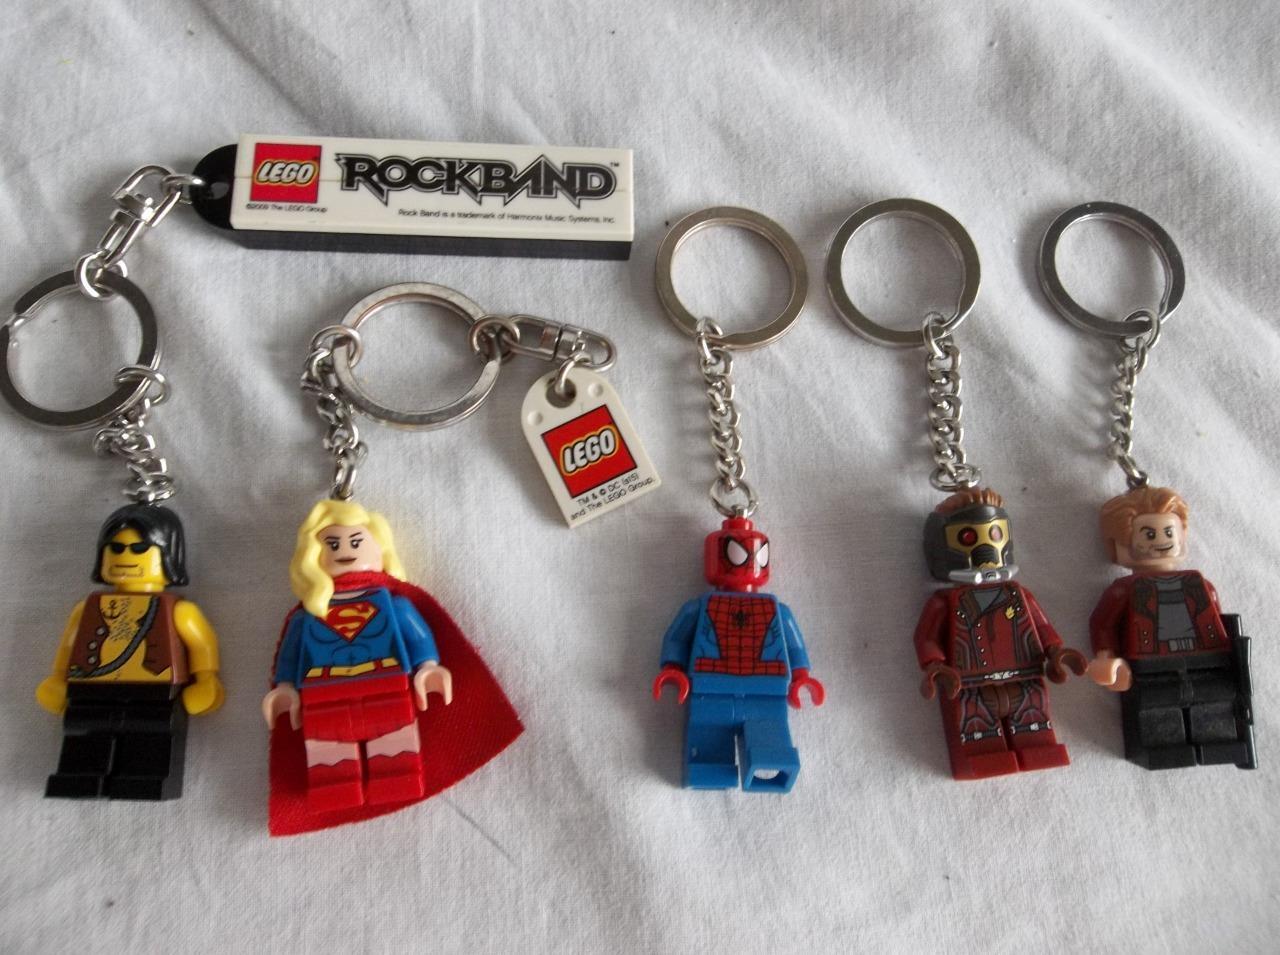 Lot/5 Lego Keychain Minifigures Rockband Spiderman Super Girl Star Lord Others